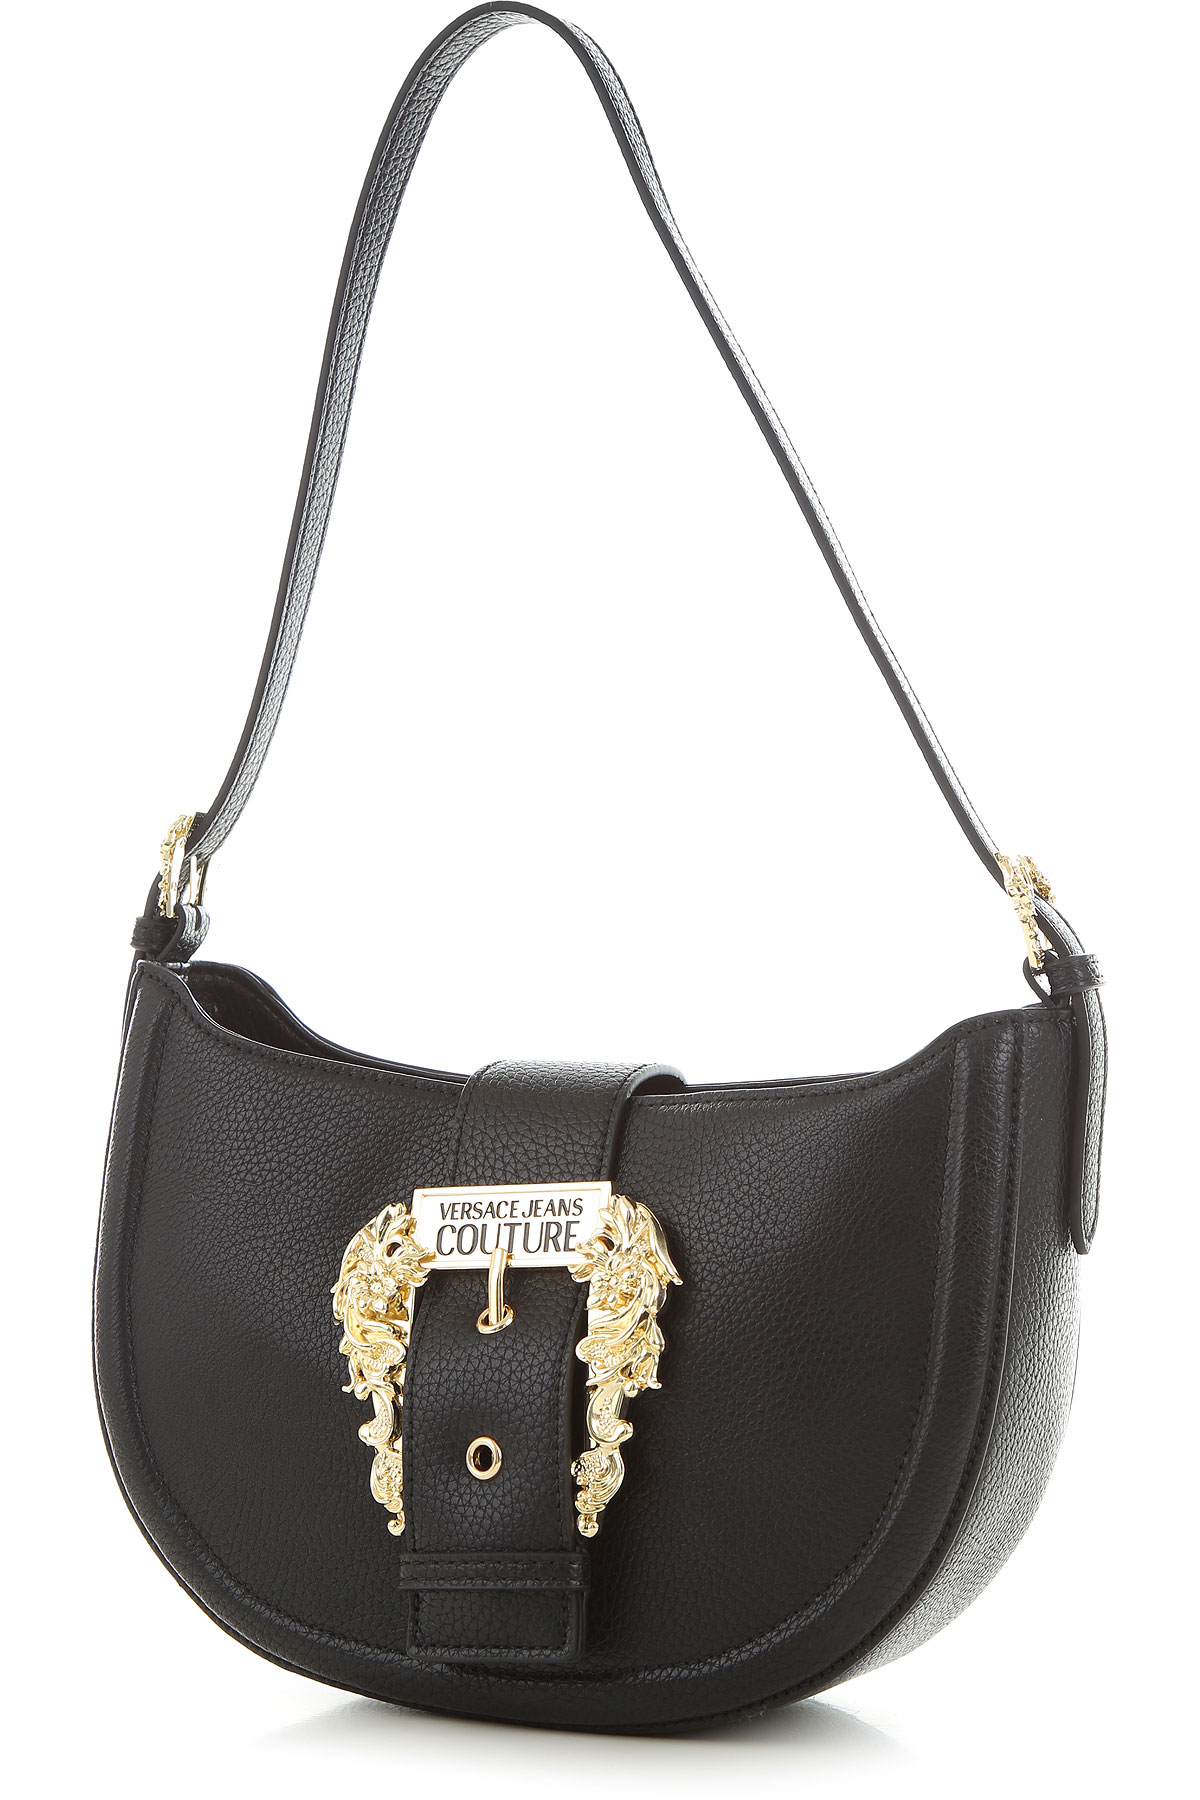 Versace Jeans Couture women Logo couture handbags black - gold: Handbags